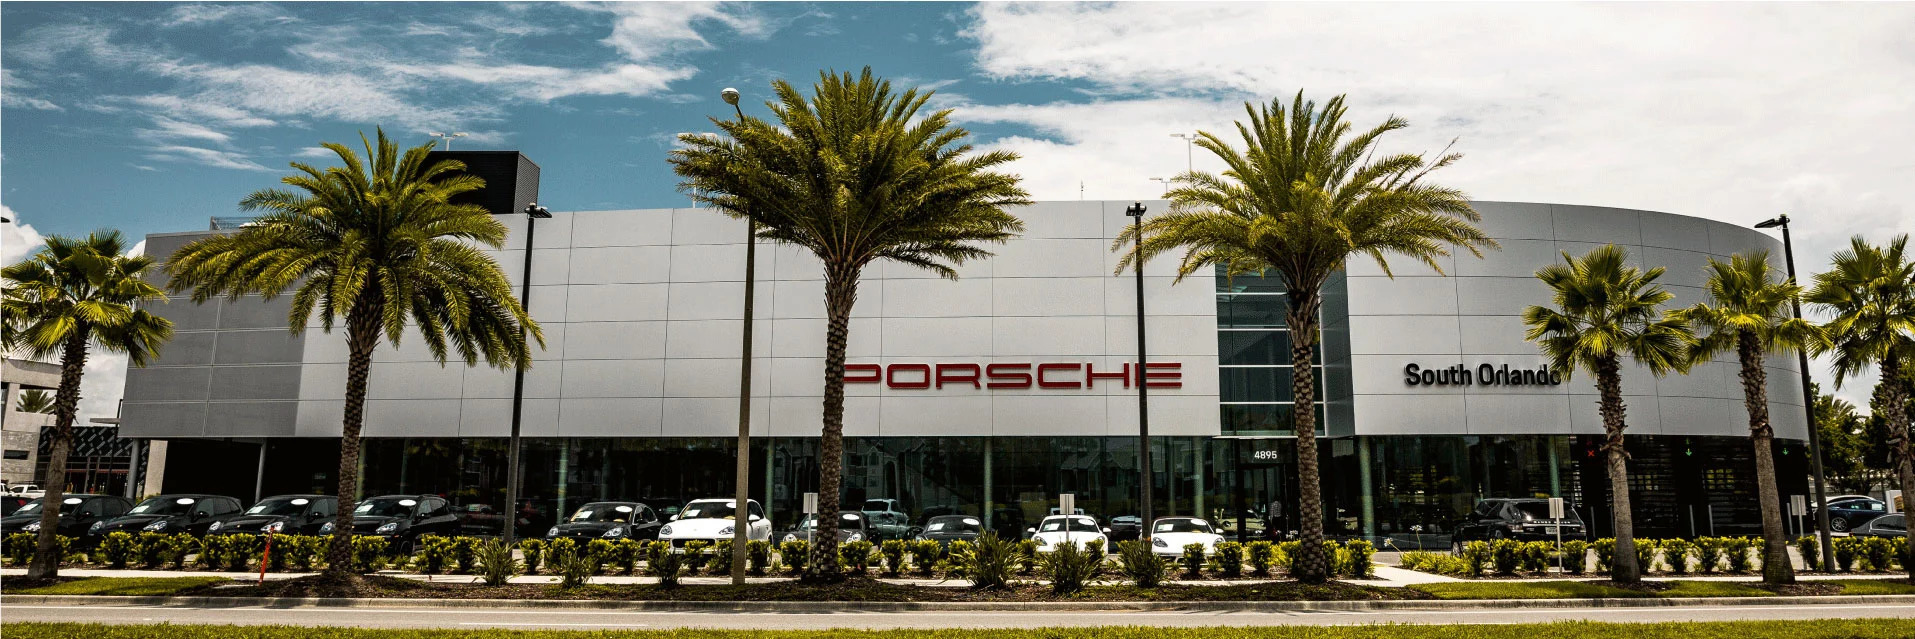  Find the Porsche of your dreams at the Porsche South Orlando dealership, your nearest Porsche Center in Oak Ridge, Florida.!